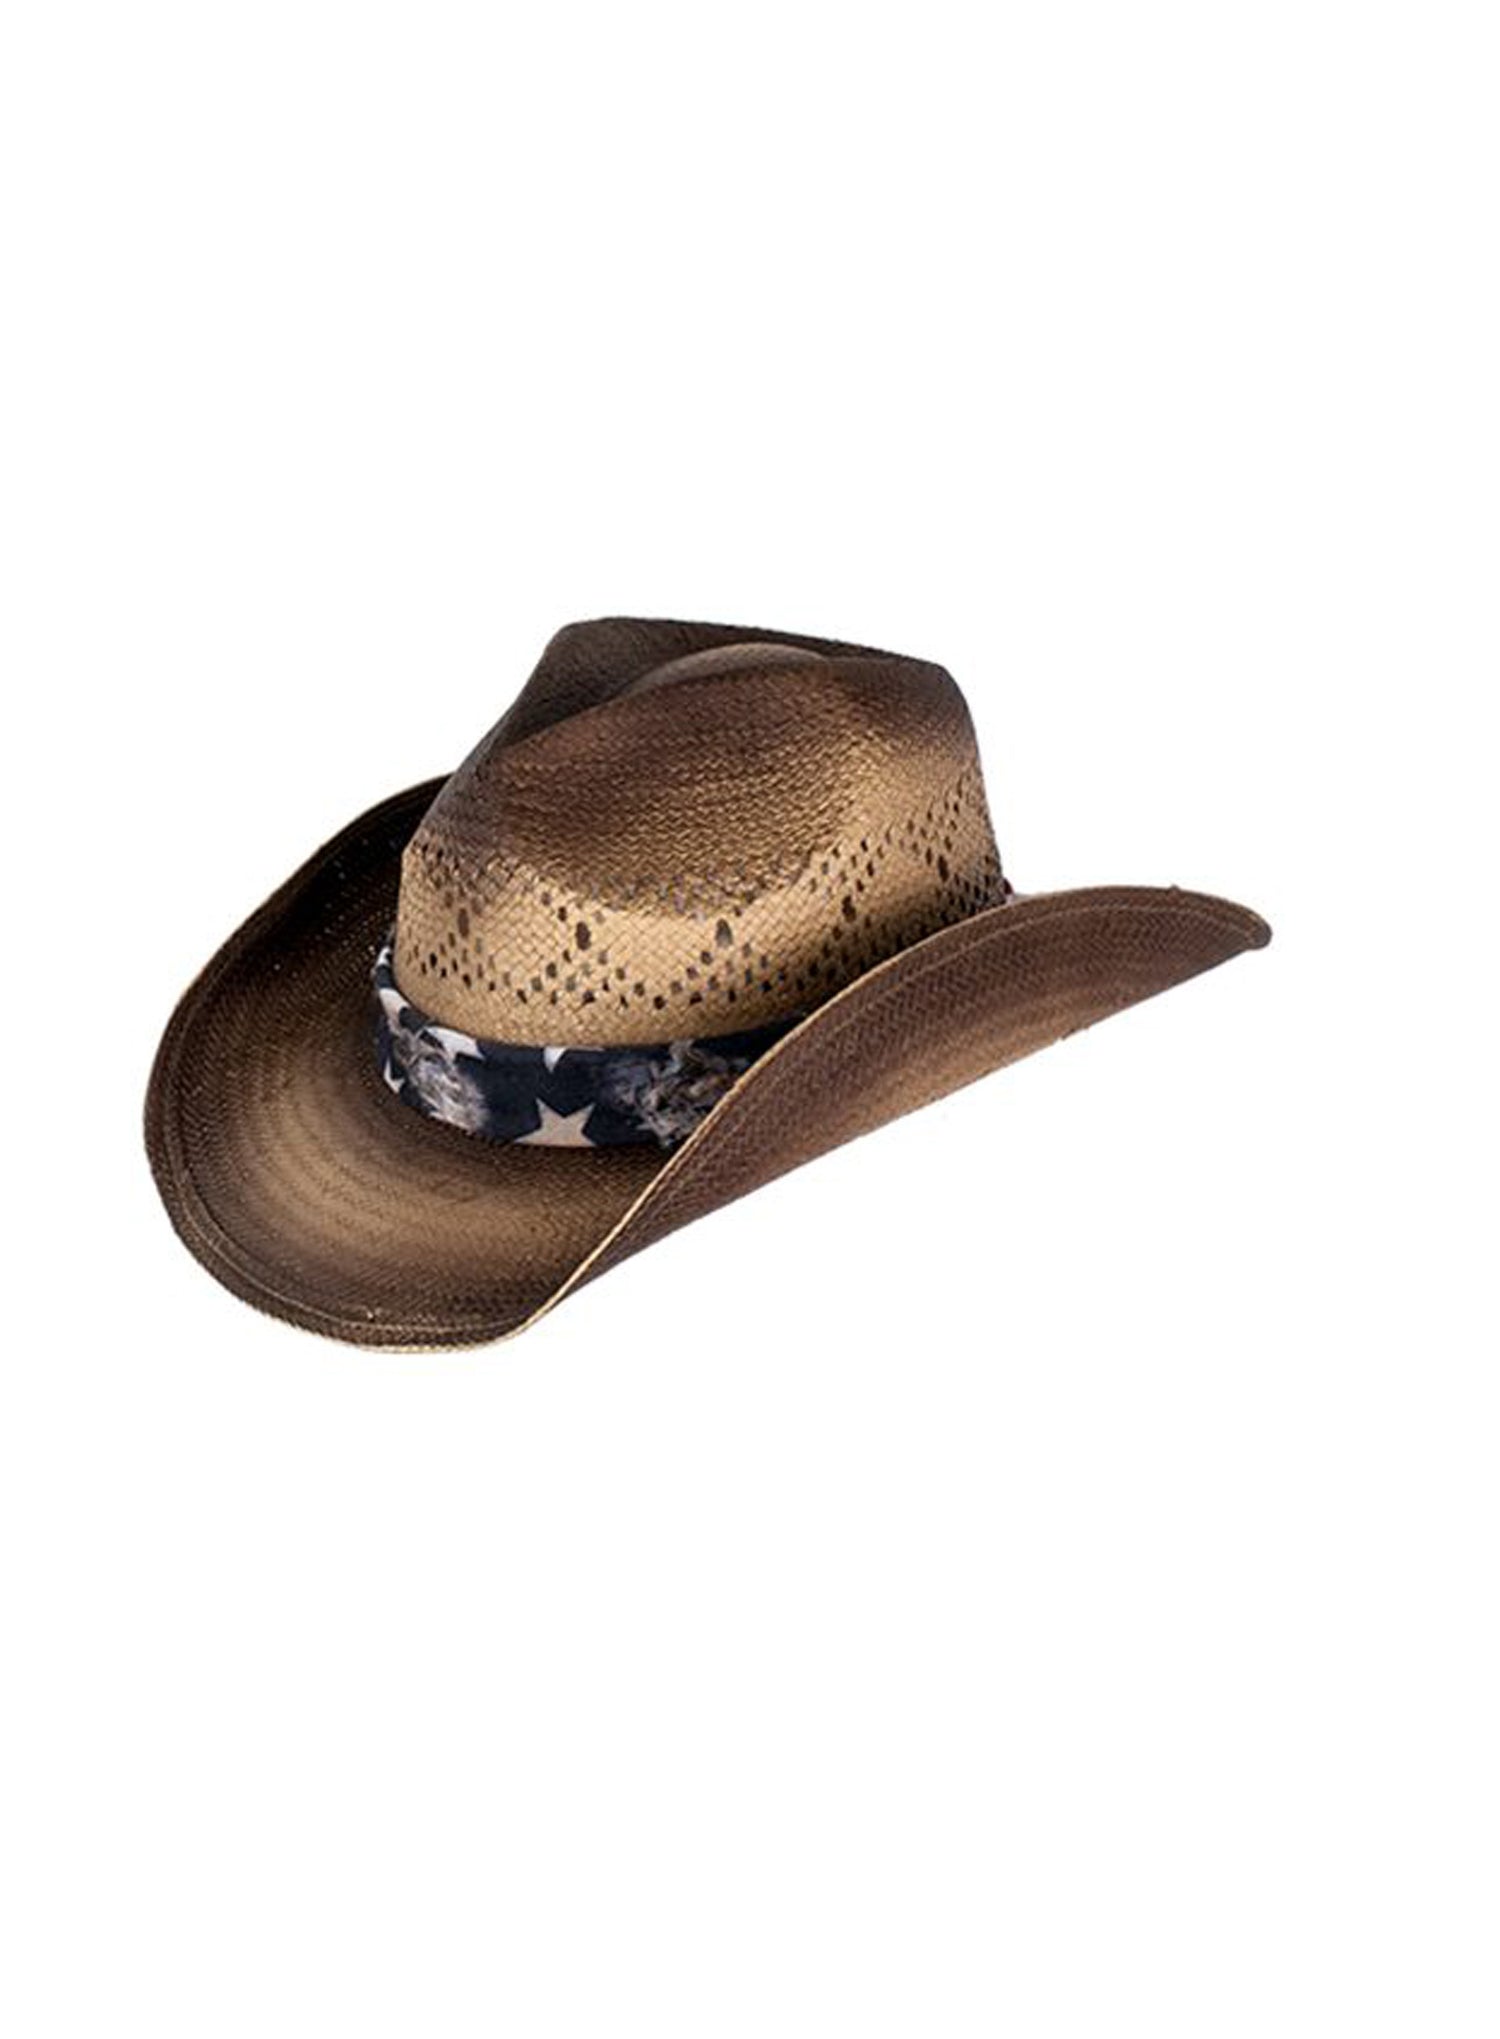 Barack Drifter Fashion Cowboy Hat